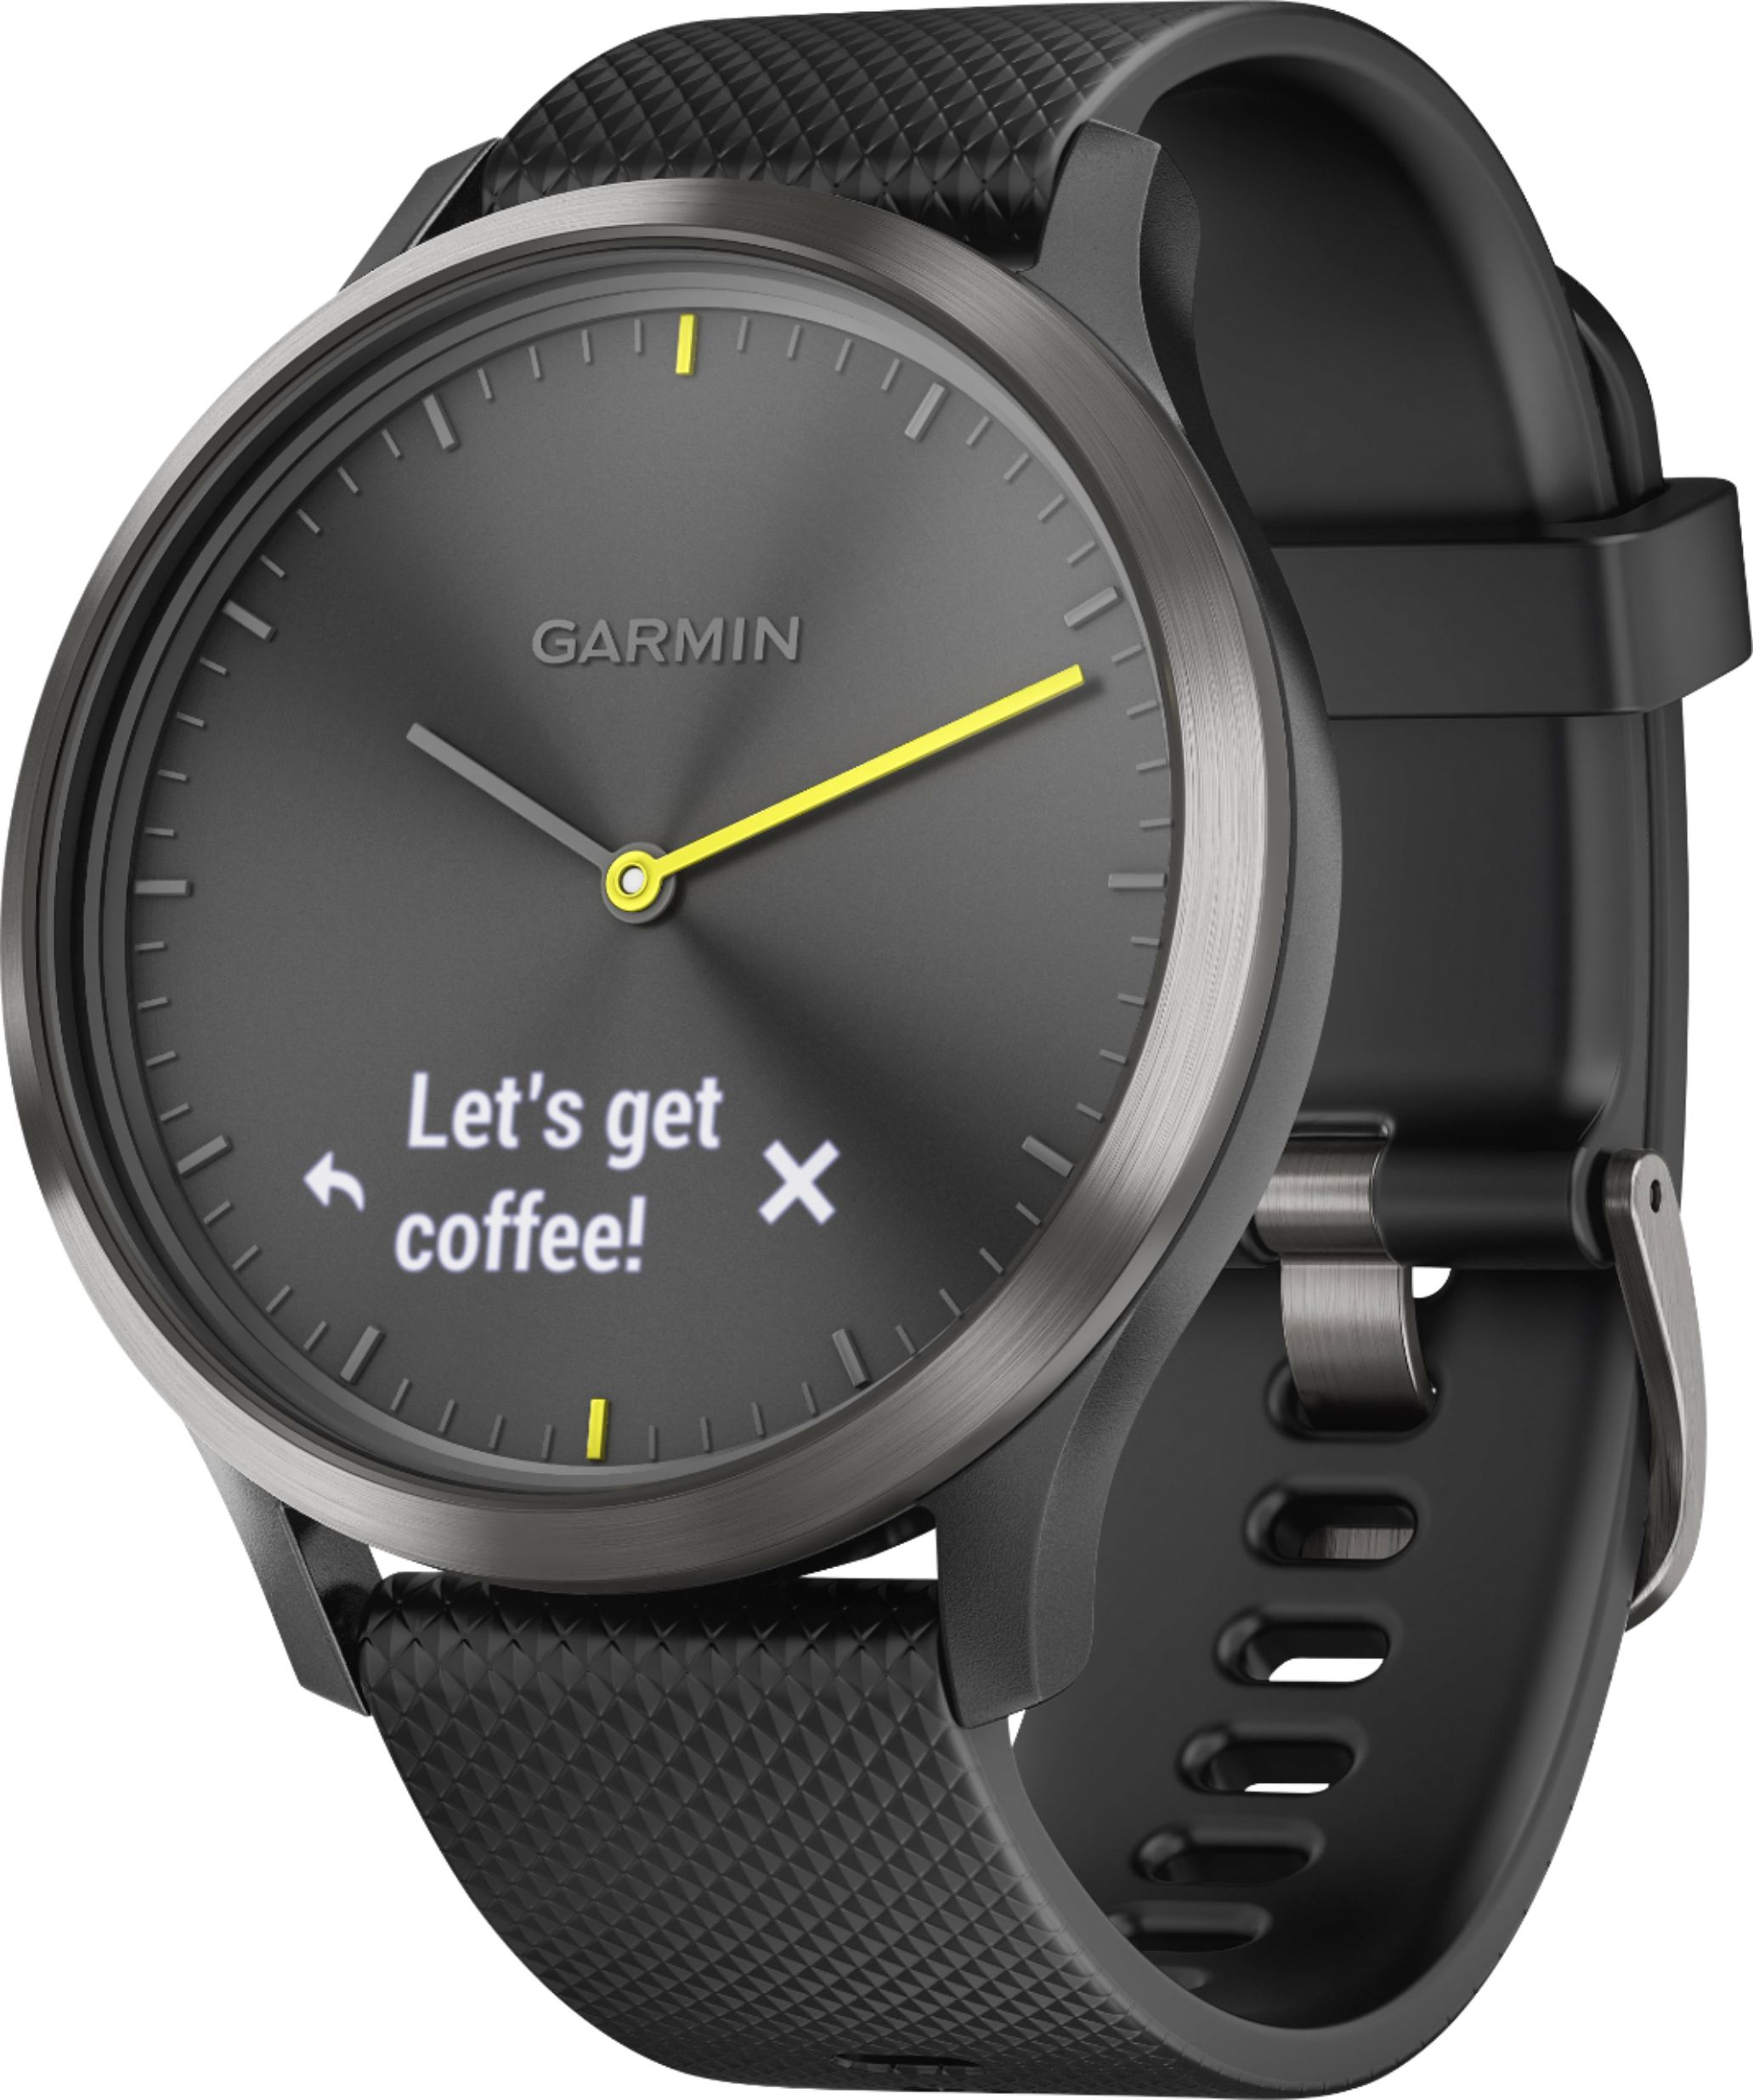 vívomove Black 010-01850-11 HR Garmin Sport Smartwatch Hybrid Best Buy: